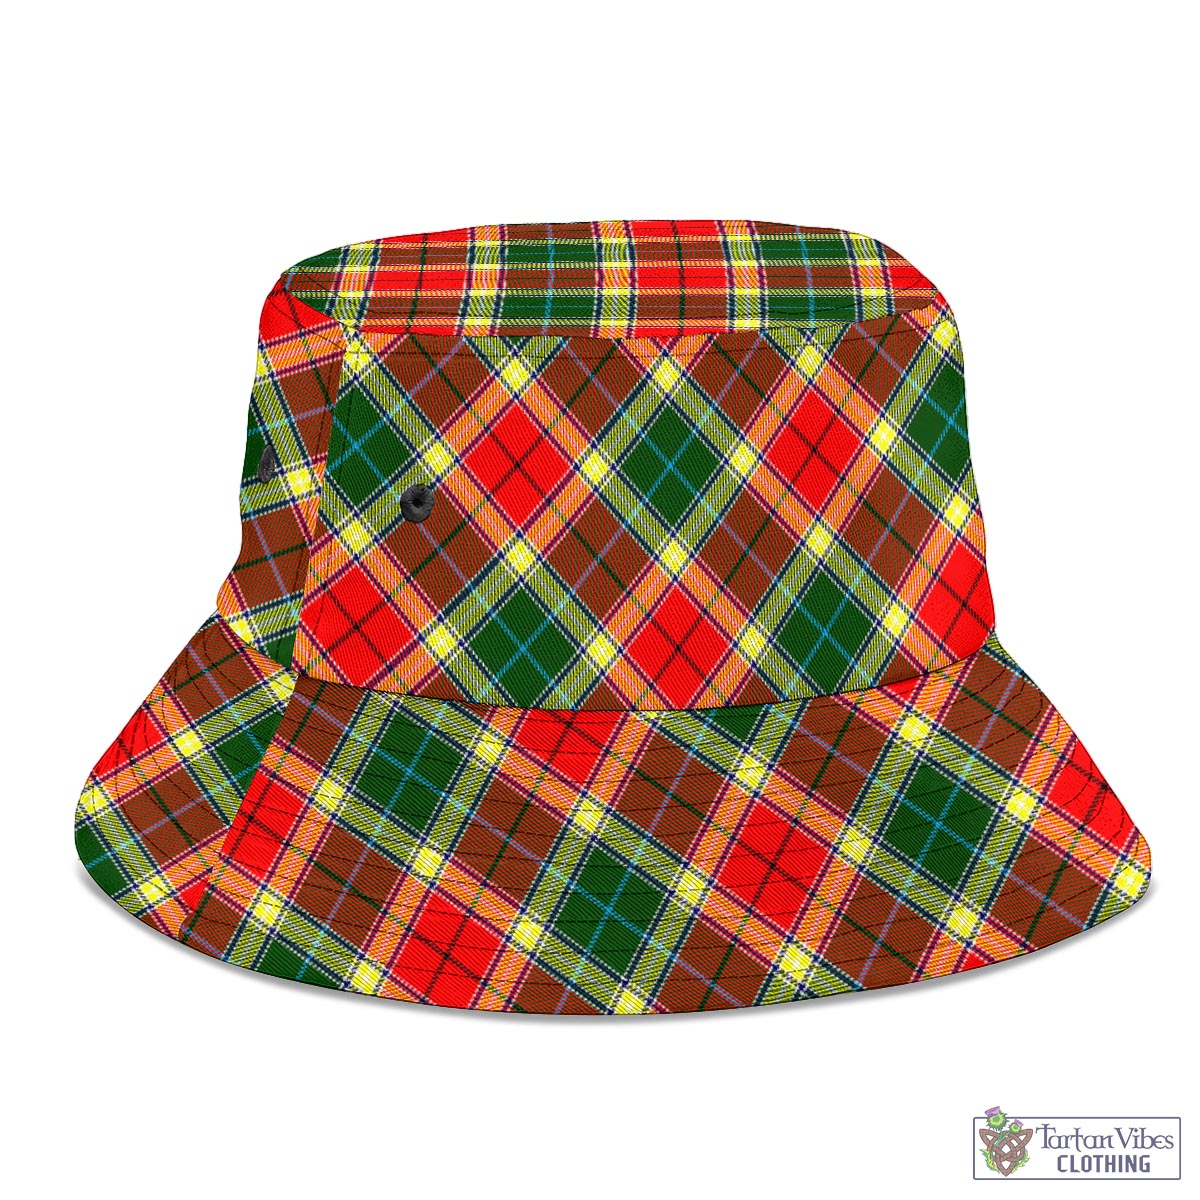 Tartan Vibes Clothing Gibsone (Gibson-Gibbs) Tartan Bucket Hat